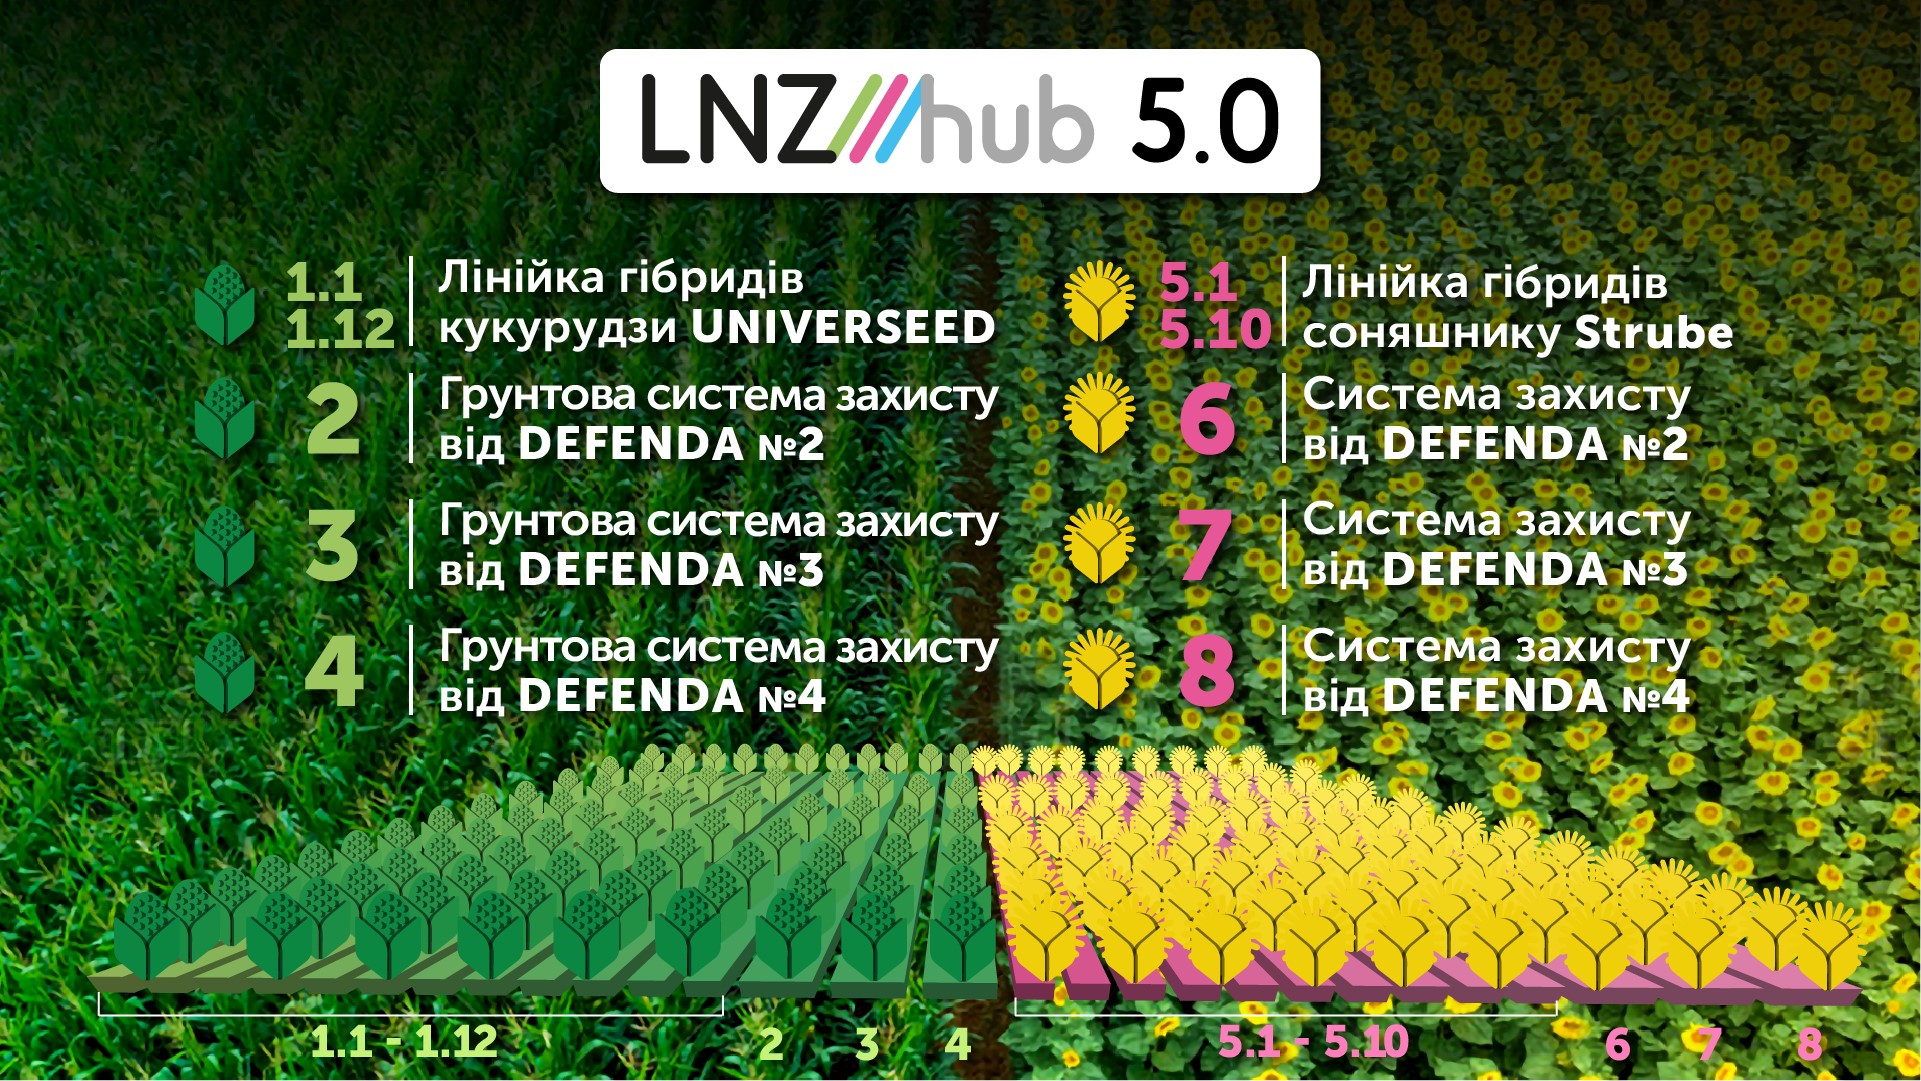 LNZ Hub 5.0 фото 1 LNZ Group